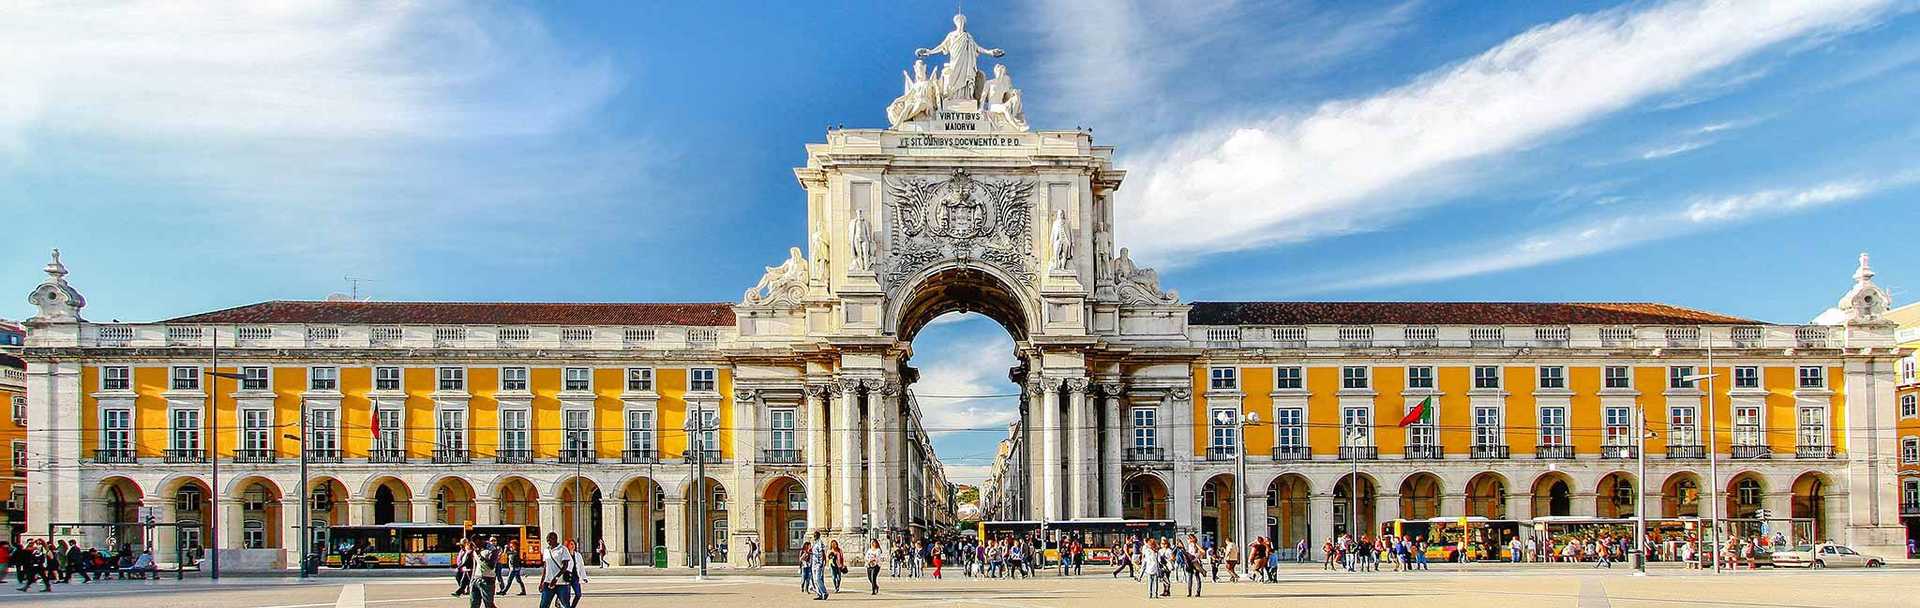 The famous arch in Lisbon's Praca Do Comercio in Lisbon, Portugal.